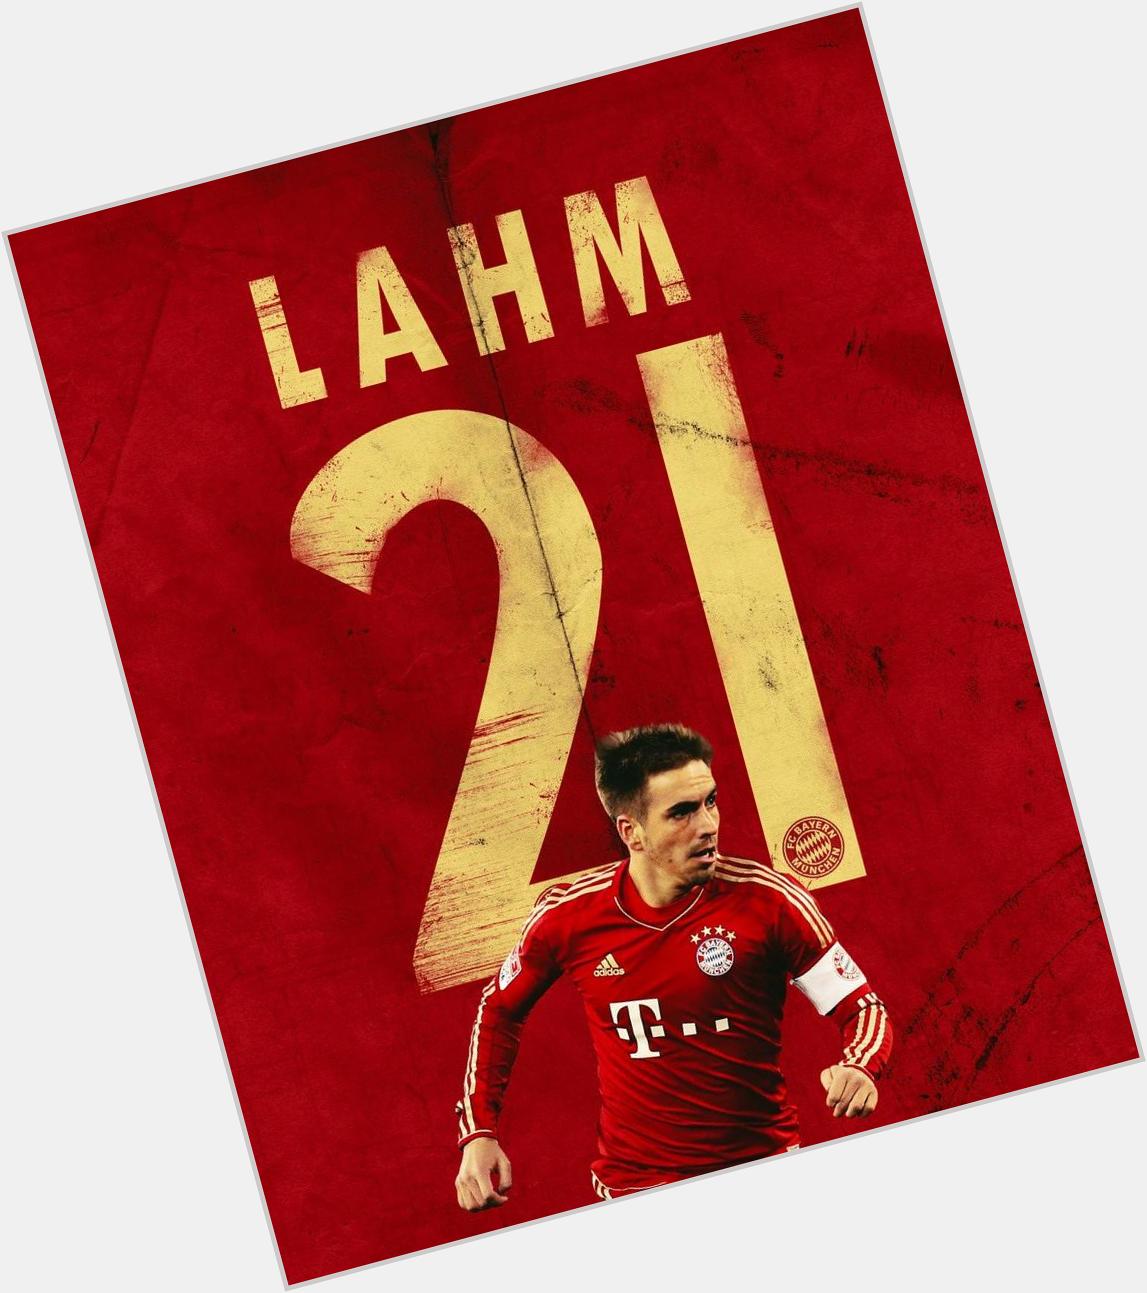 " Happy birthday Der Käpitan Philipp Lahm! 